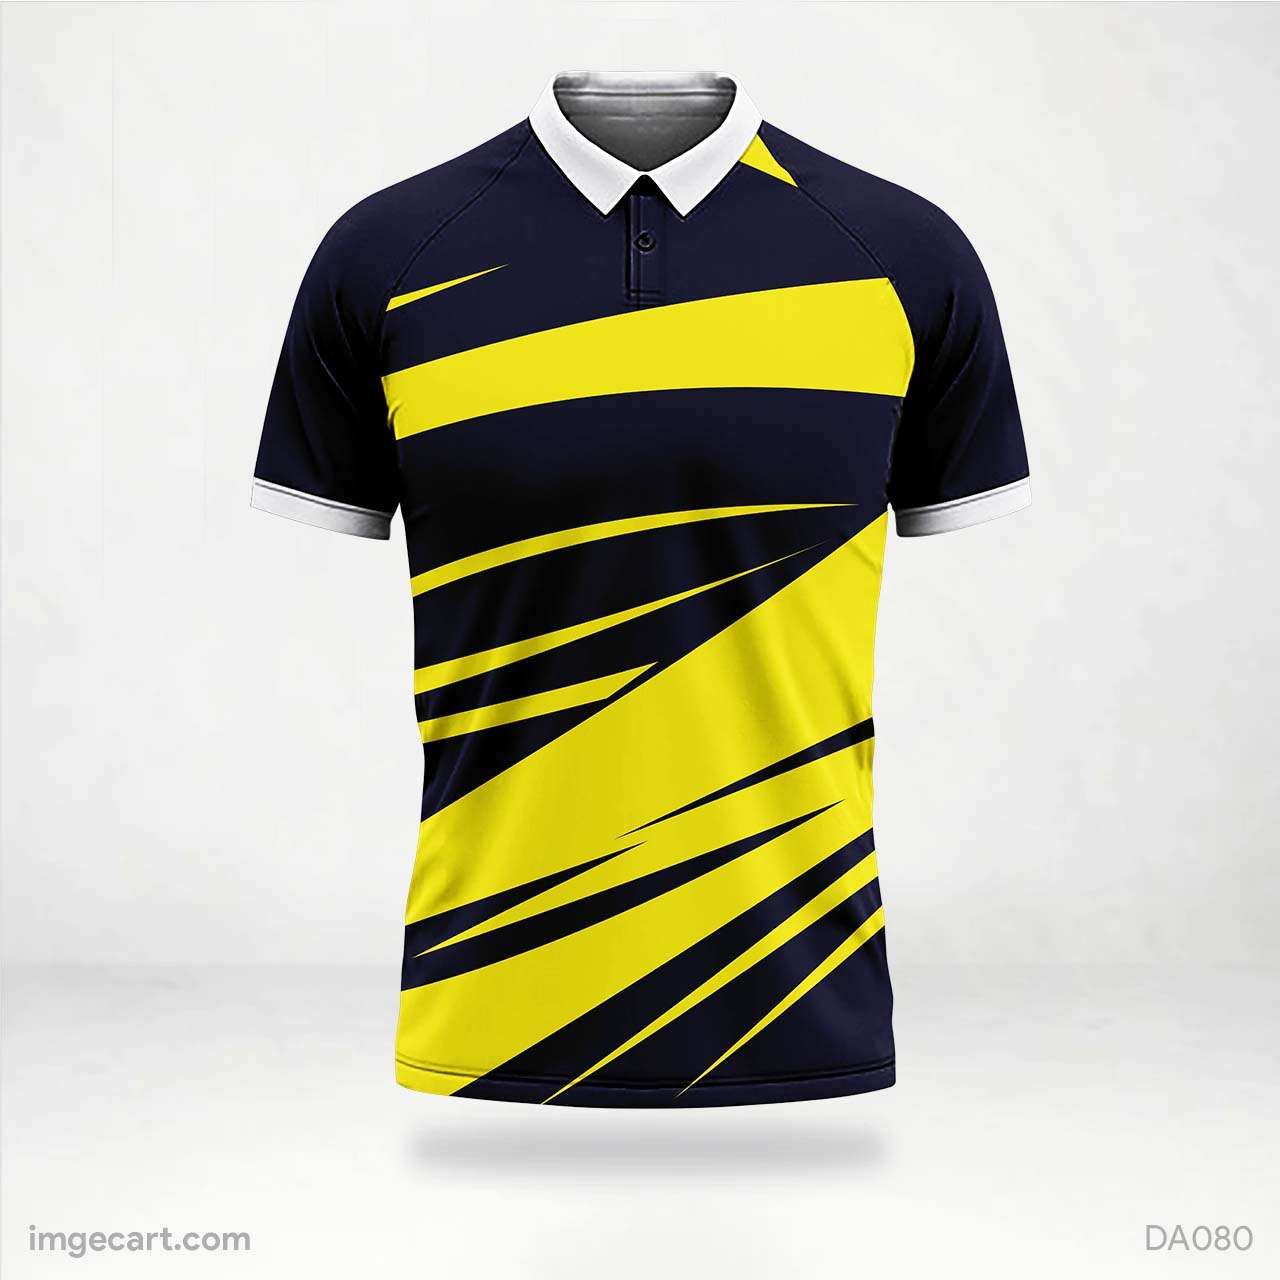 Buy Jersey Design on X: Orange Yellow Black Cricket Jersey Design